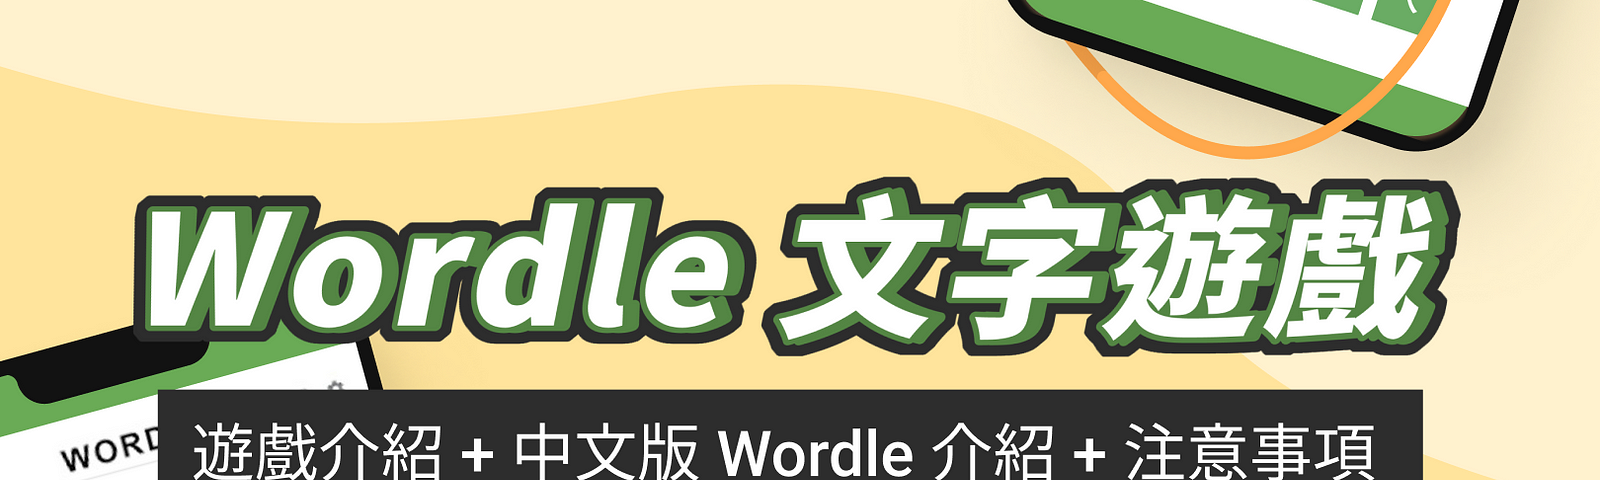 Wordle 文字遊戲 遊戲介紹 + 中文版 Wordle 注得了介紹 + 注意事項